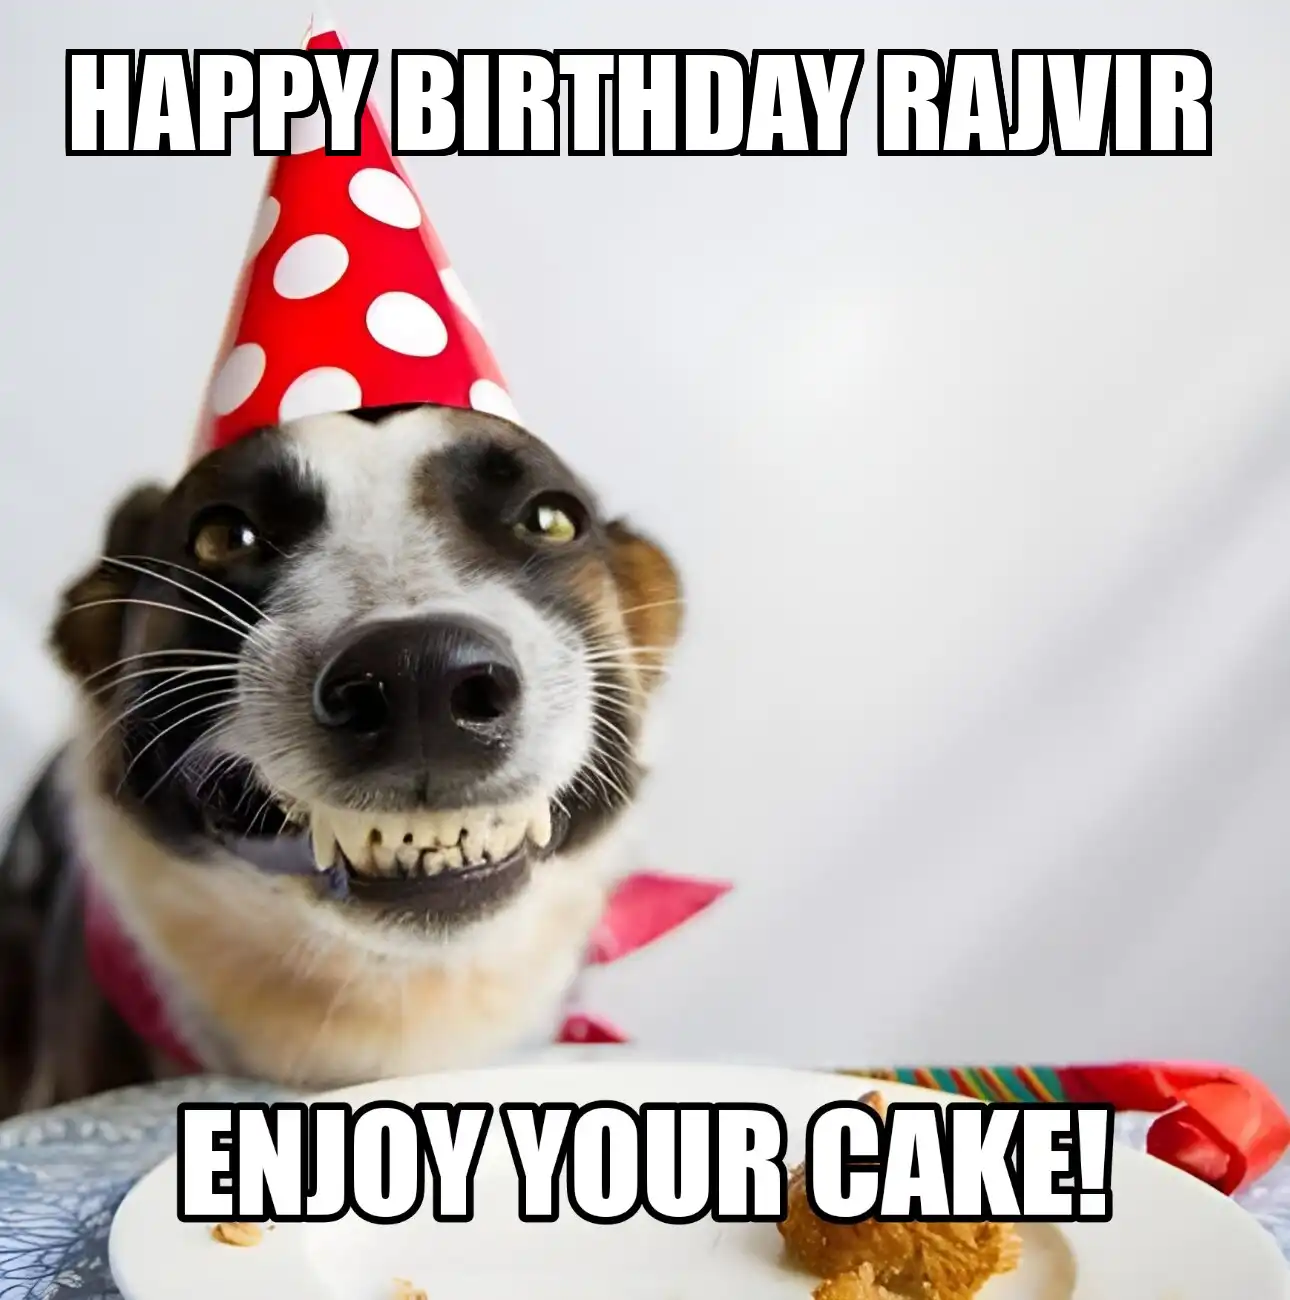 Happy Birthday Rajvir Enjoy Your Cake Dog Meme